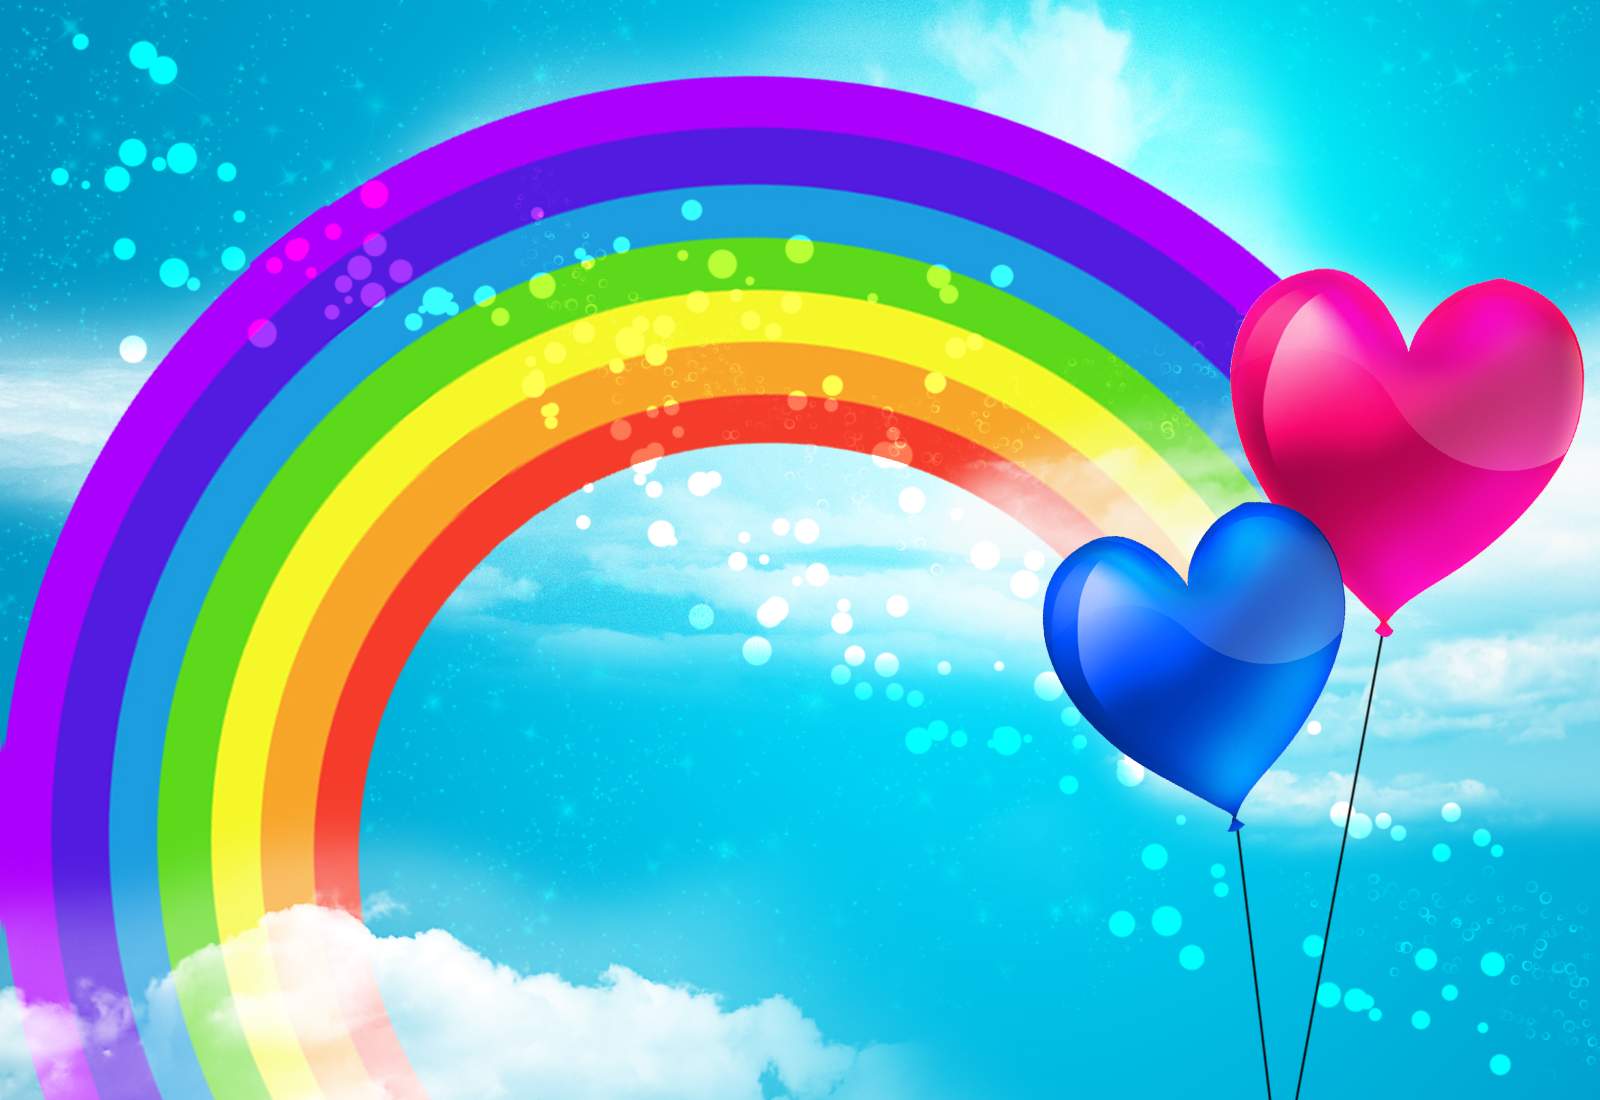 popular-rainbows-rainbow-os-and-backgrounds